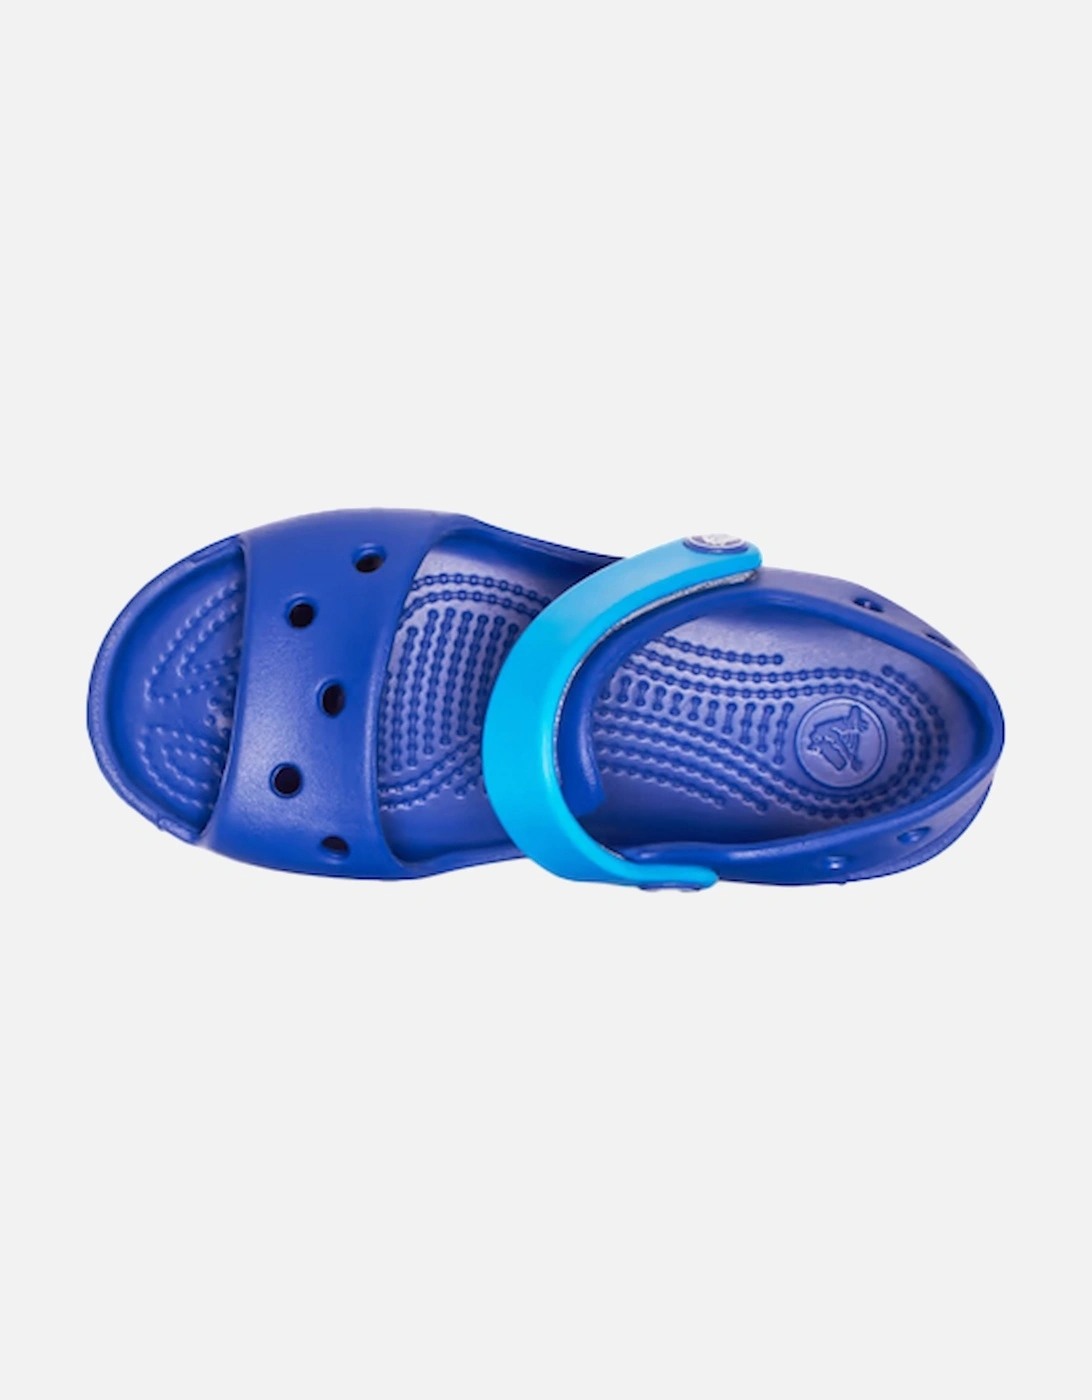 Kids Sandals Cerulean Blue / Ocean